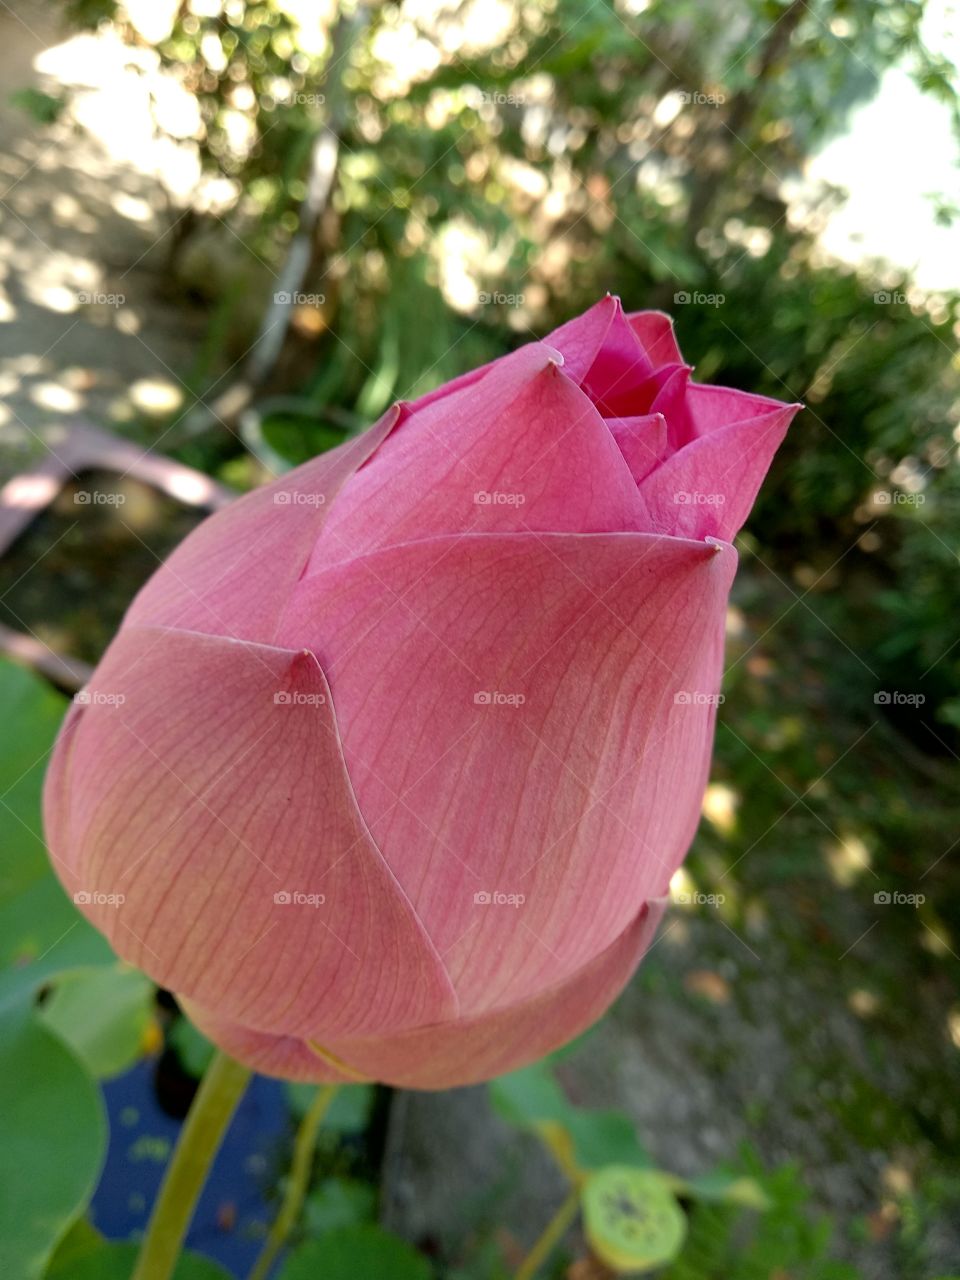 Lotus Blooming